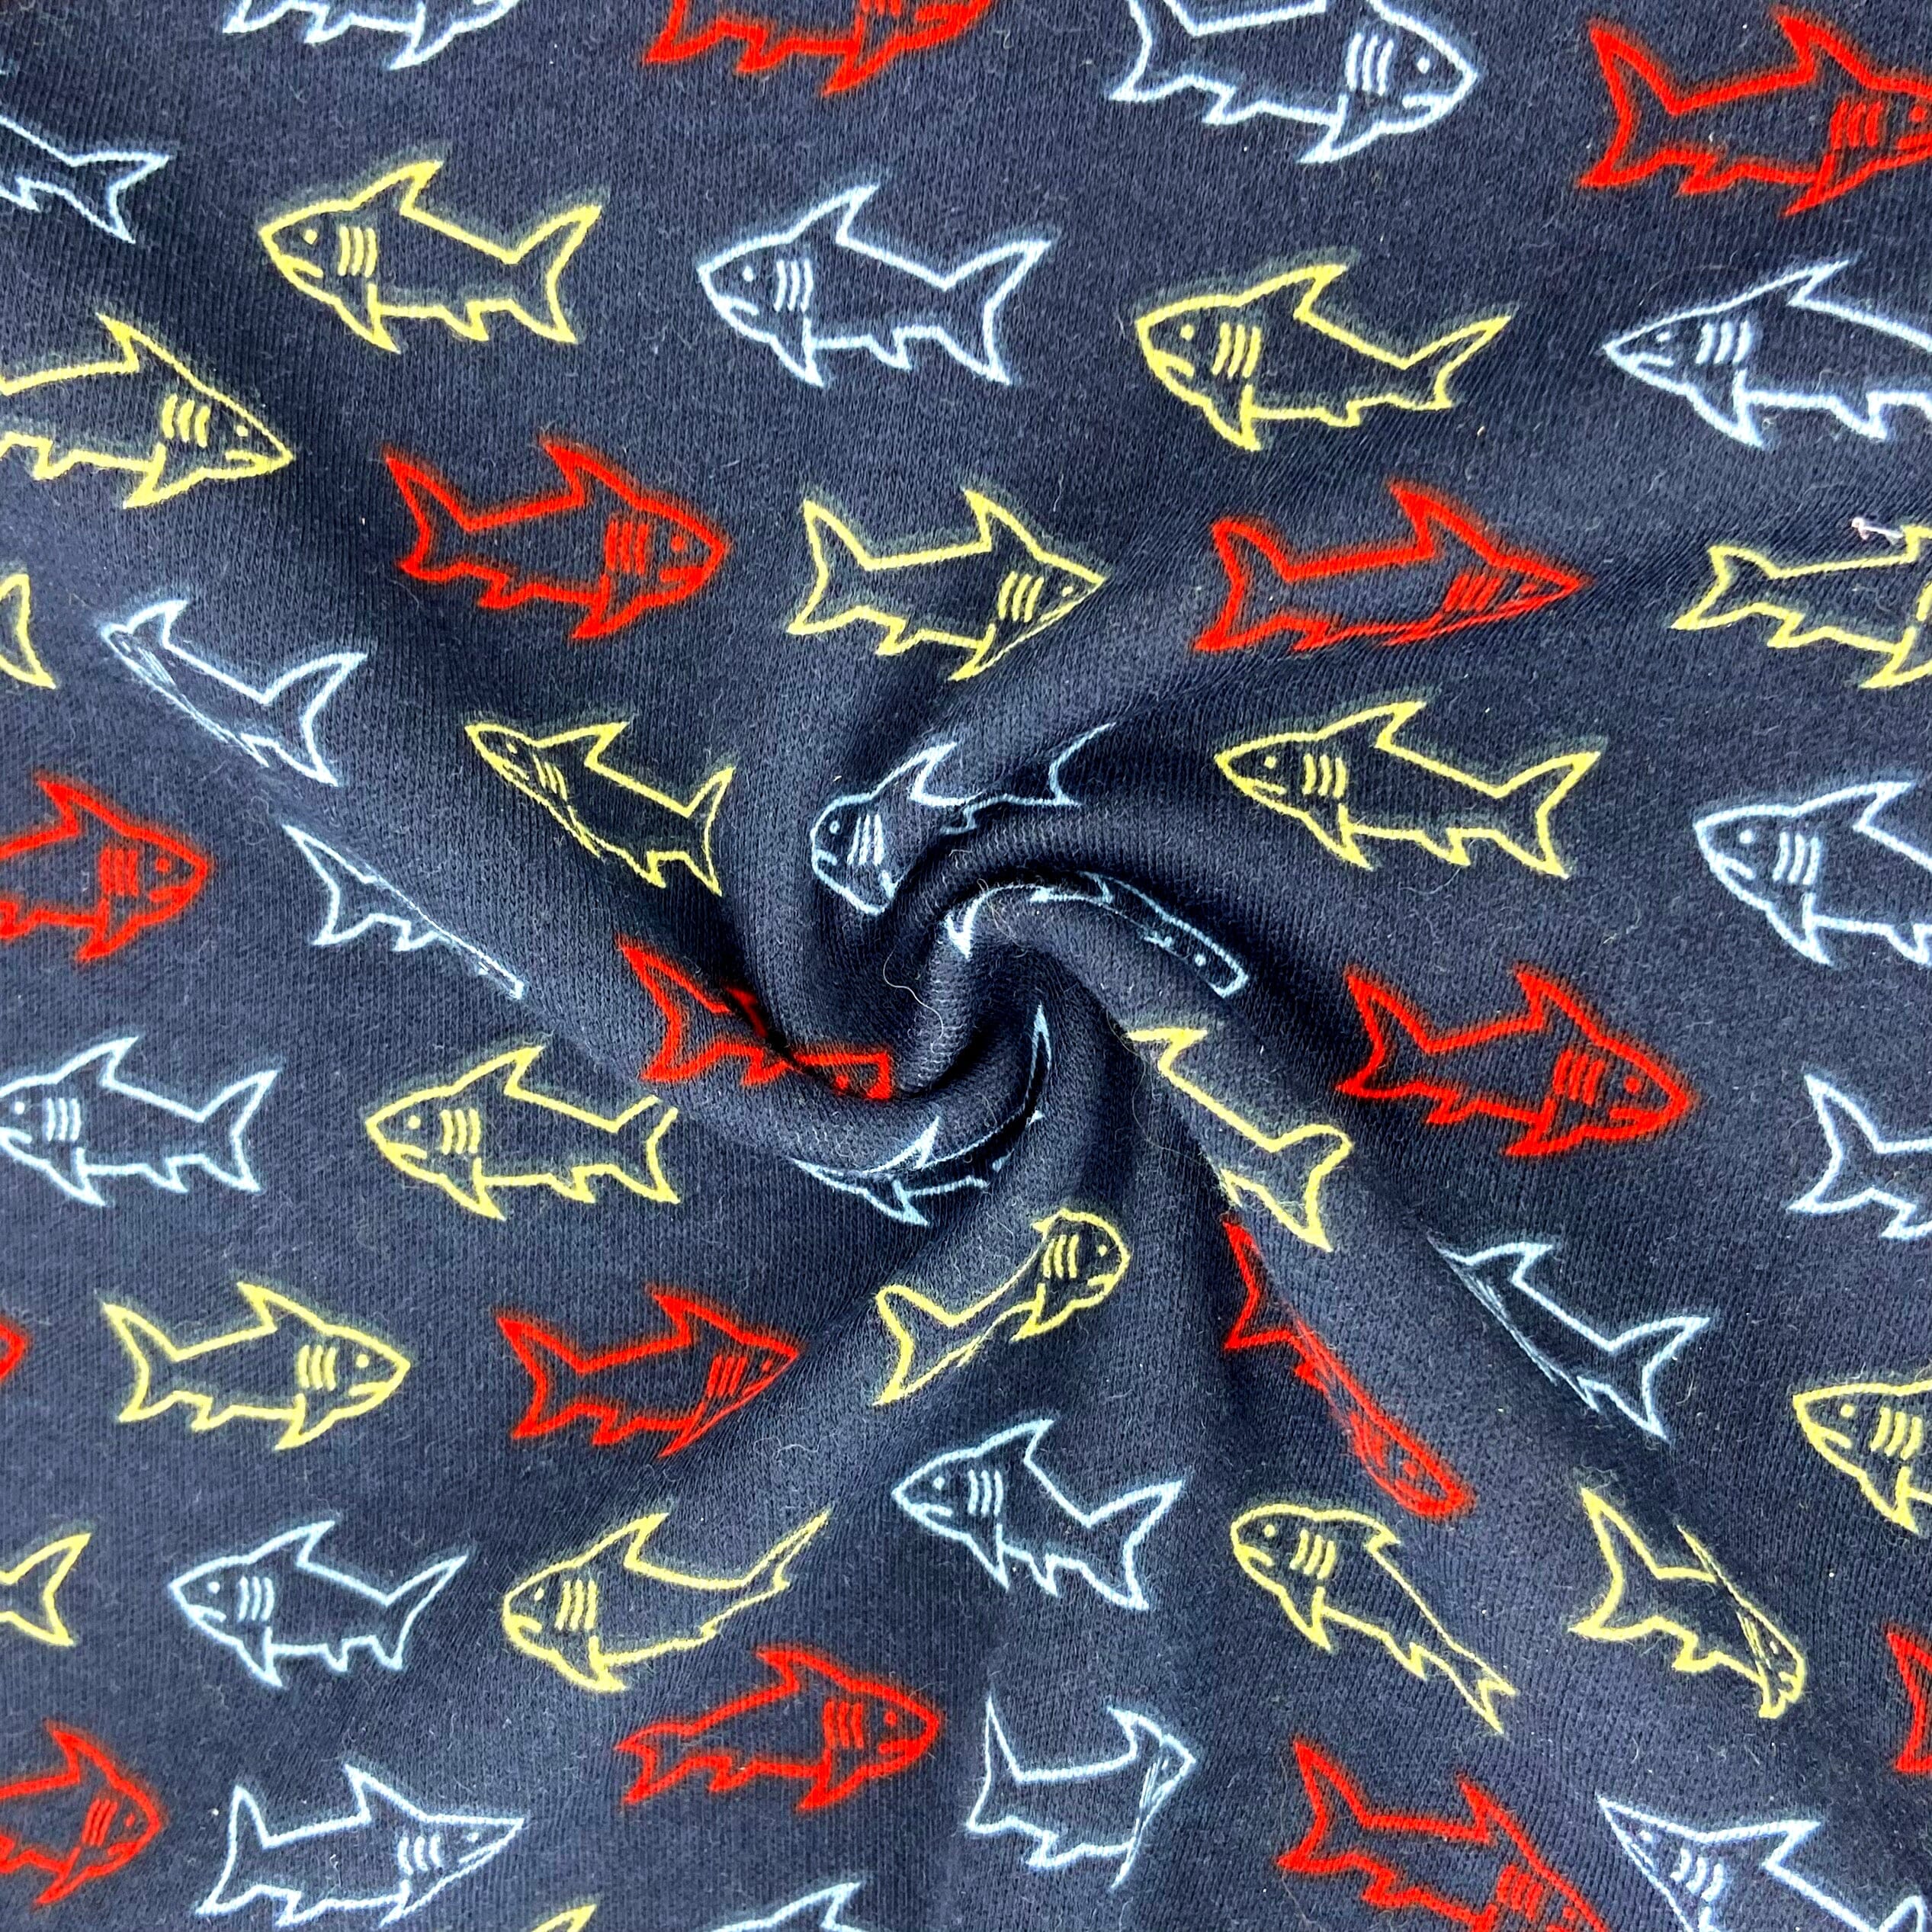 Men's Navy Blue Shark Patterned Novelty Print Cotton Crew Neck T-Shirt